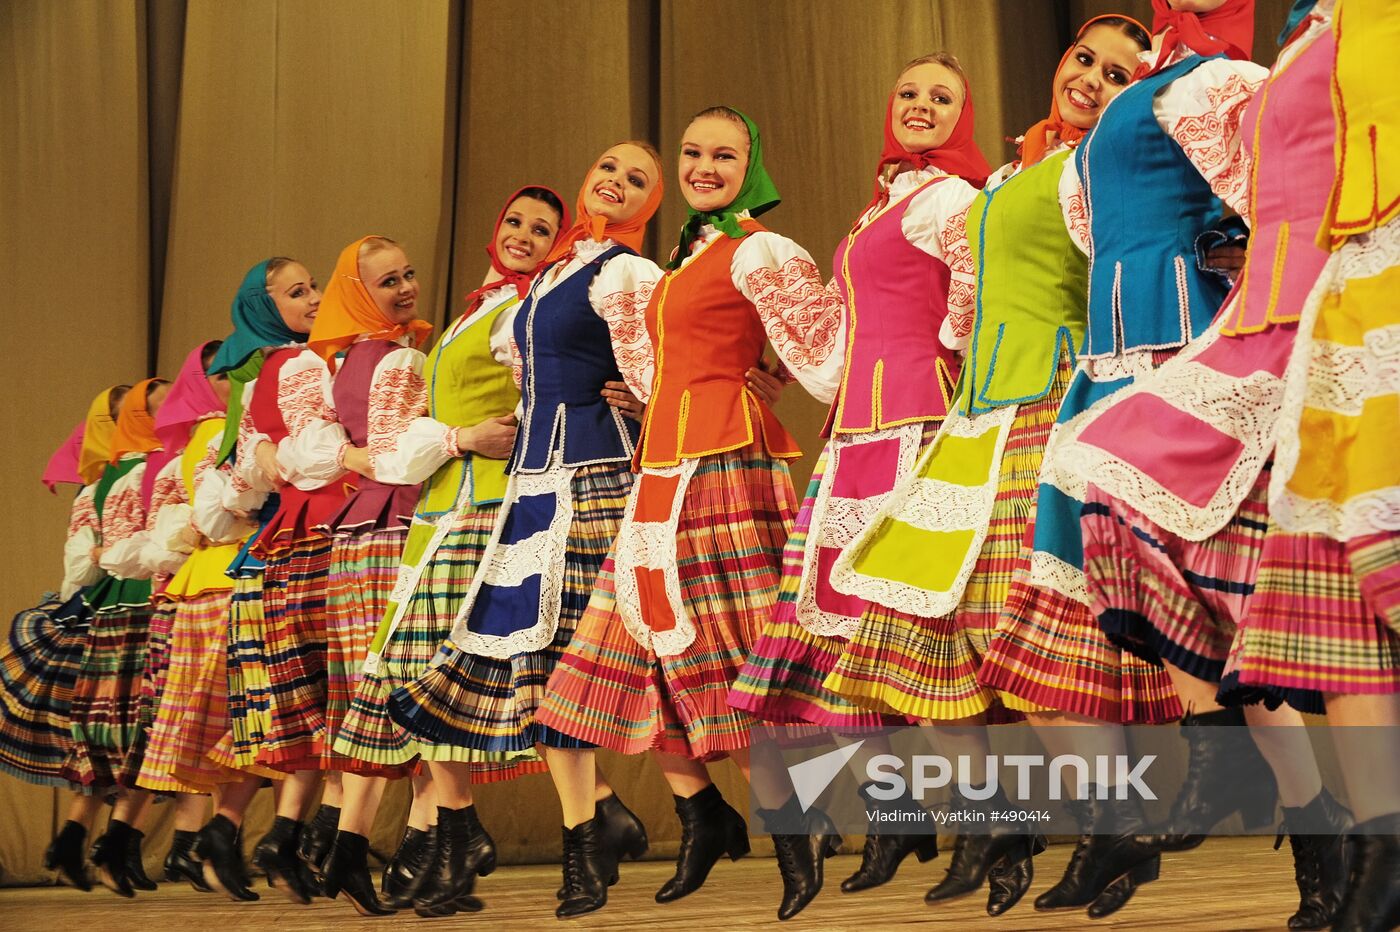 Igor Moiseyev Folk Dance Company